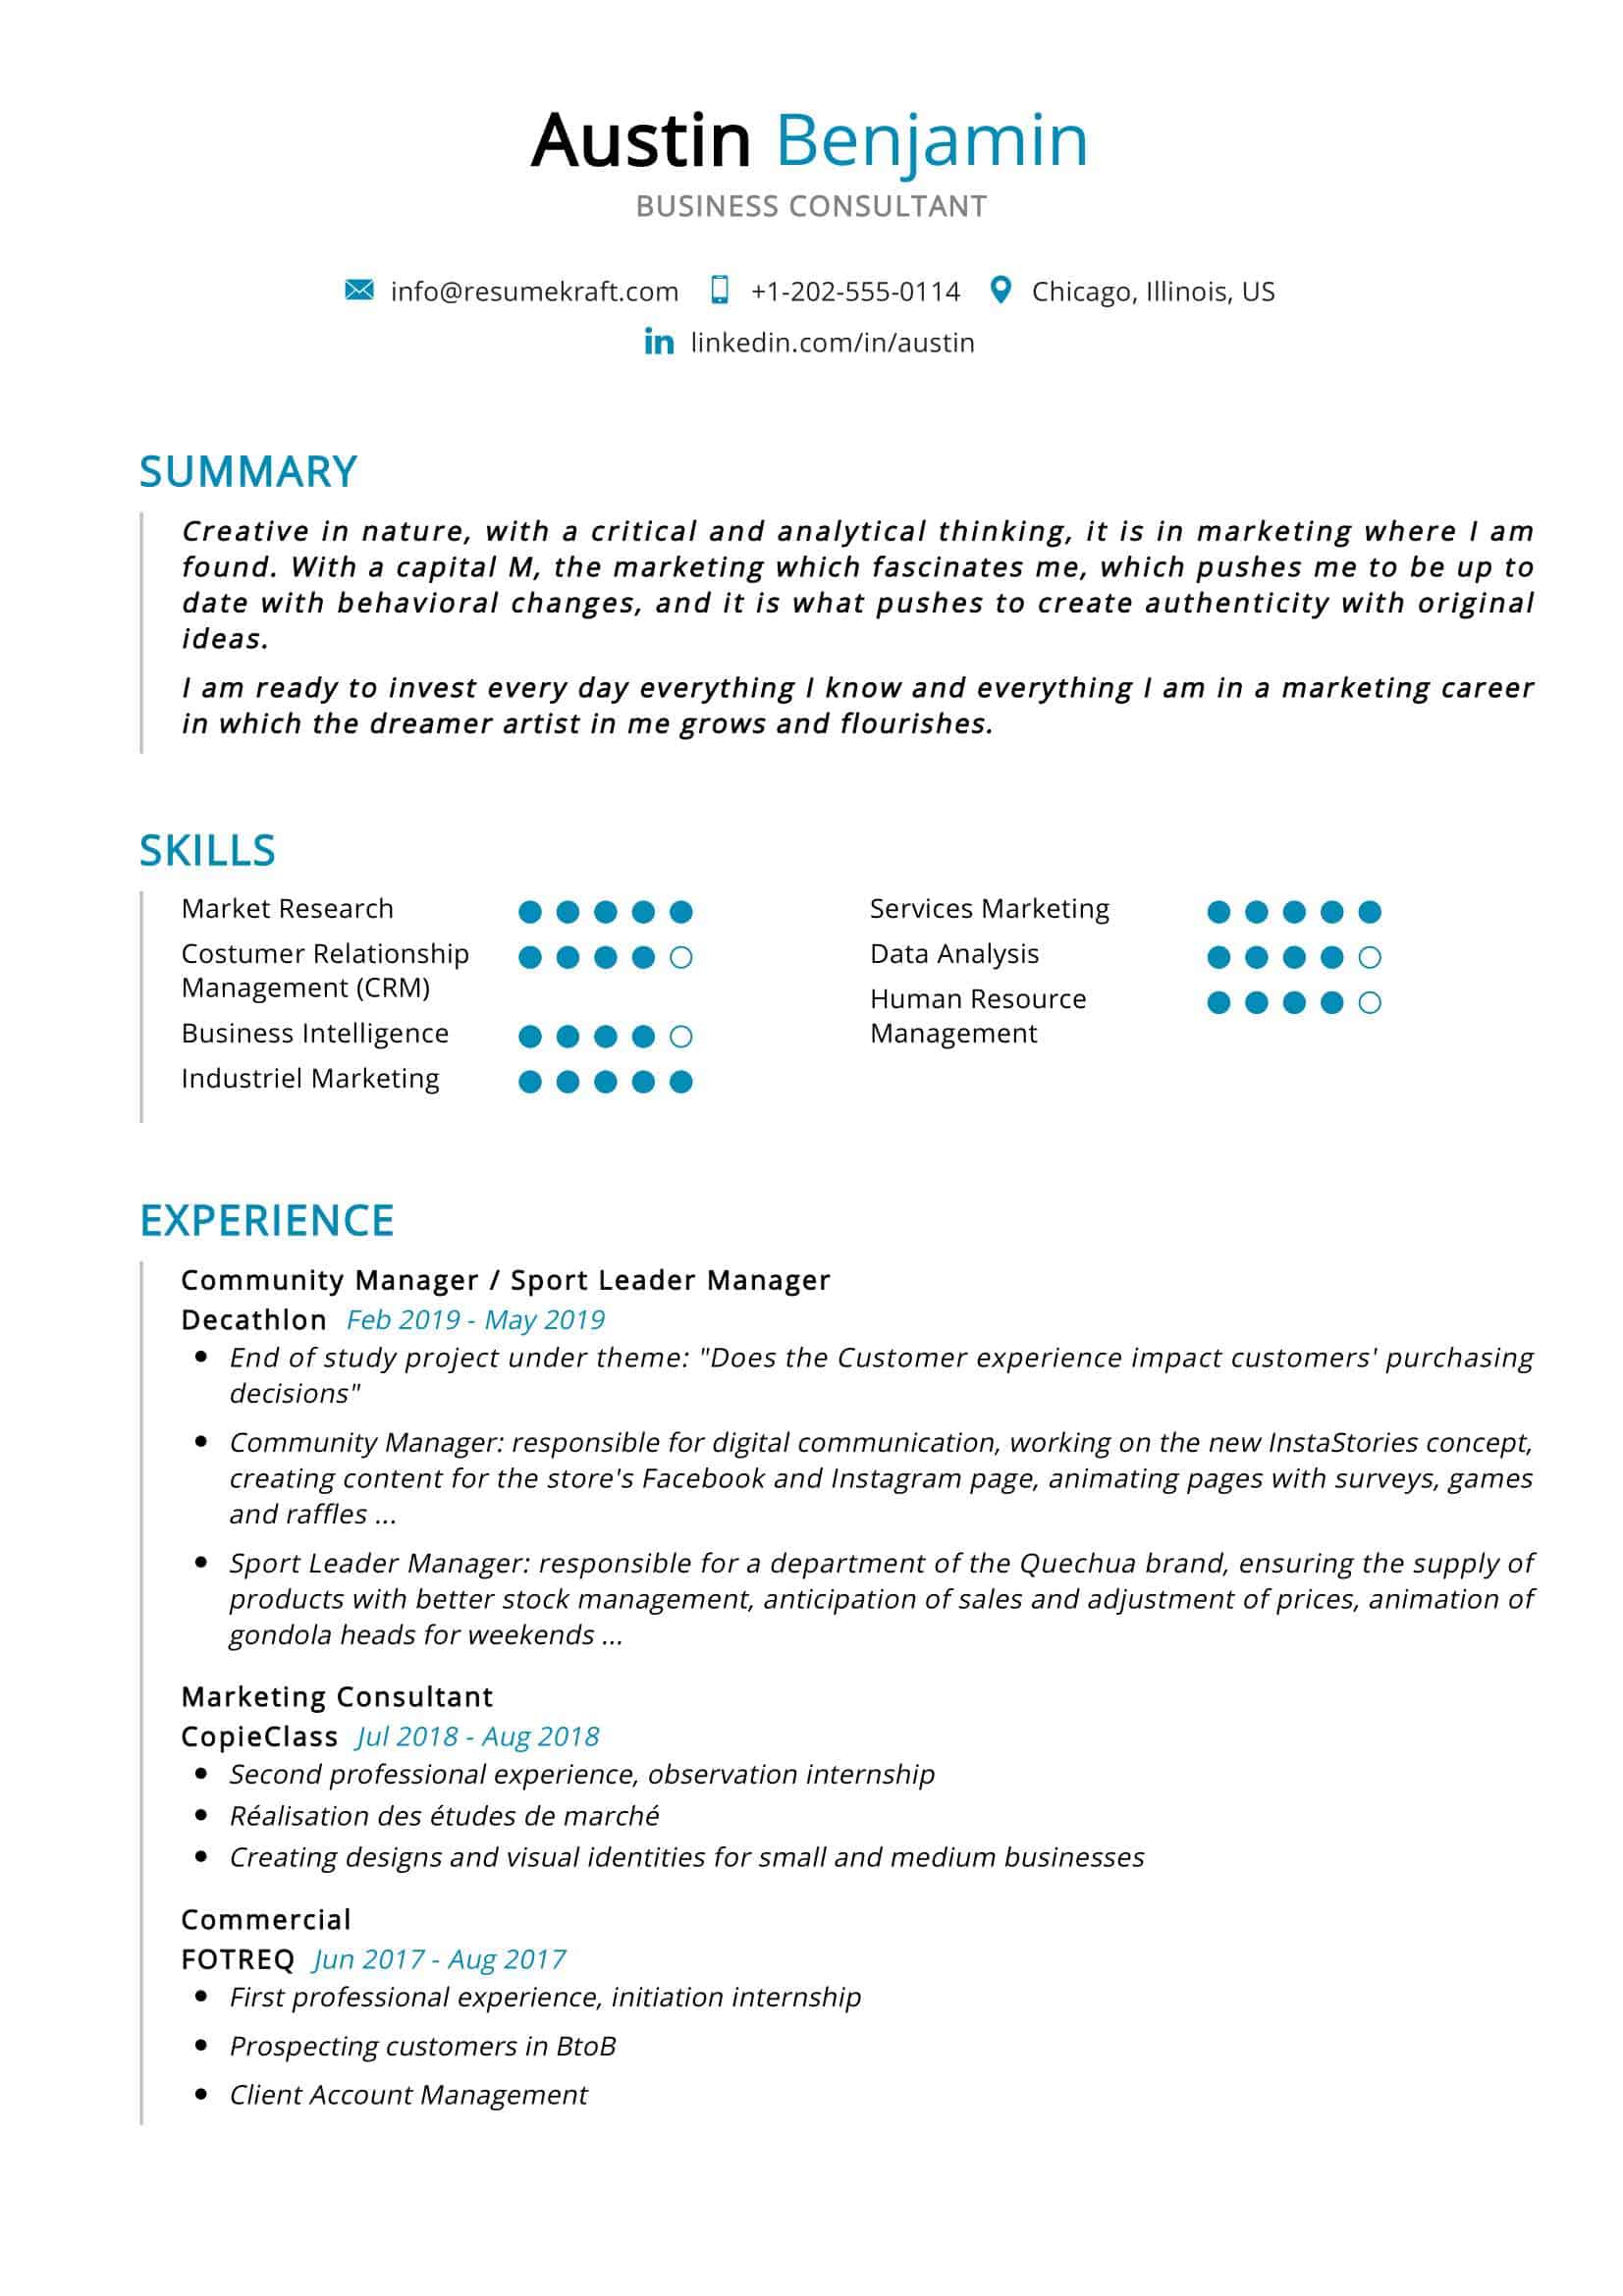 Business Consultant Resume Sample 2023 | Writing Tips - ResumeKraft